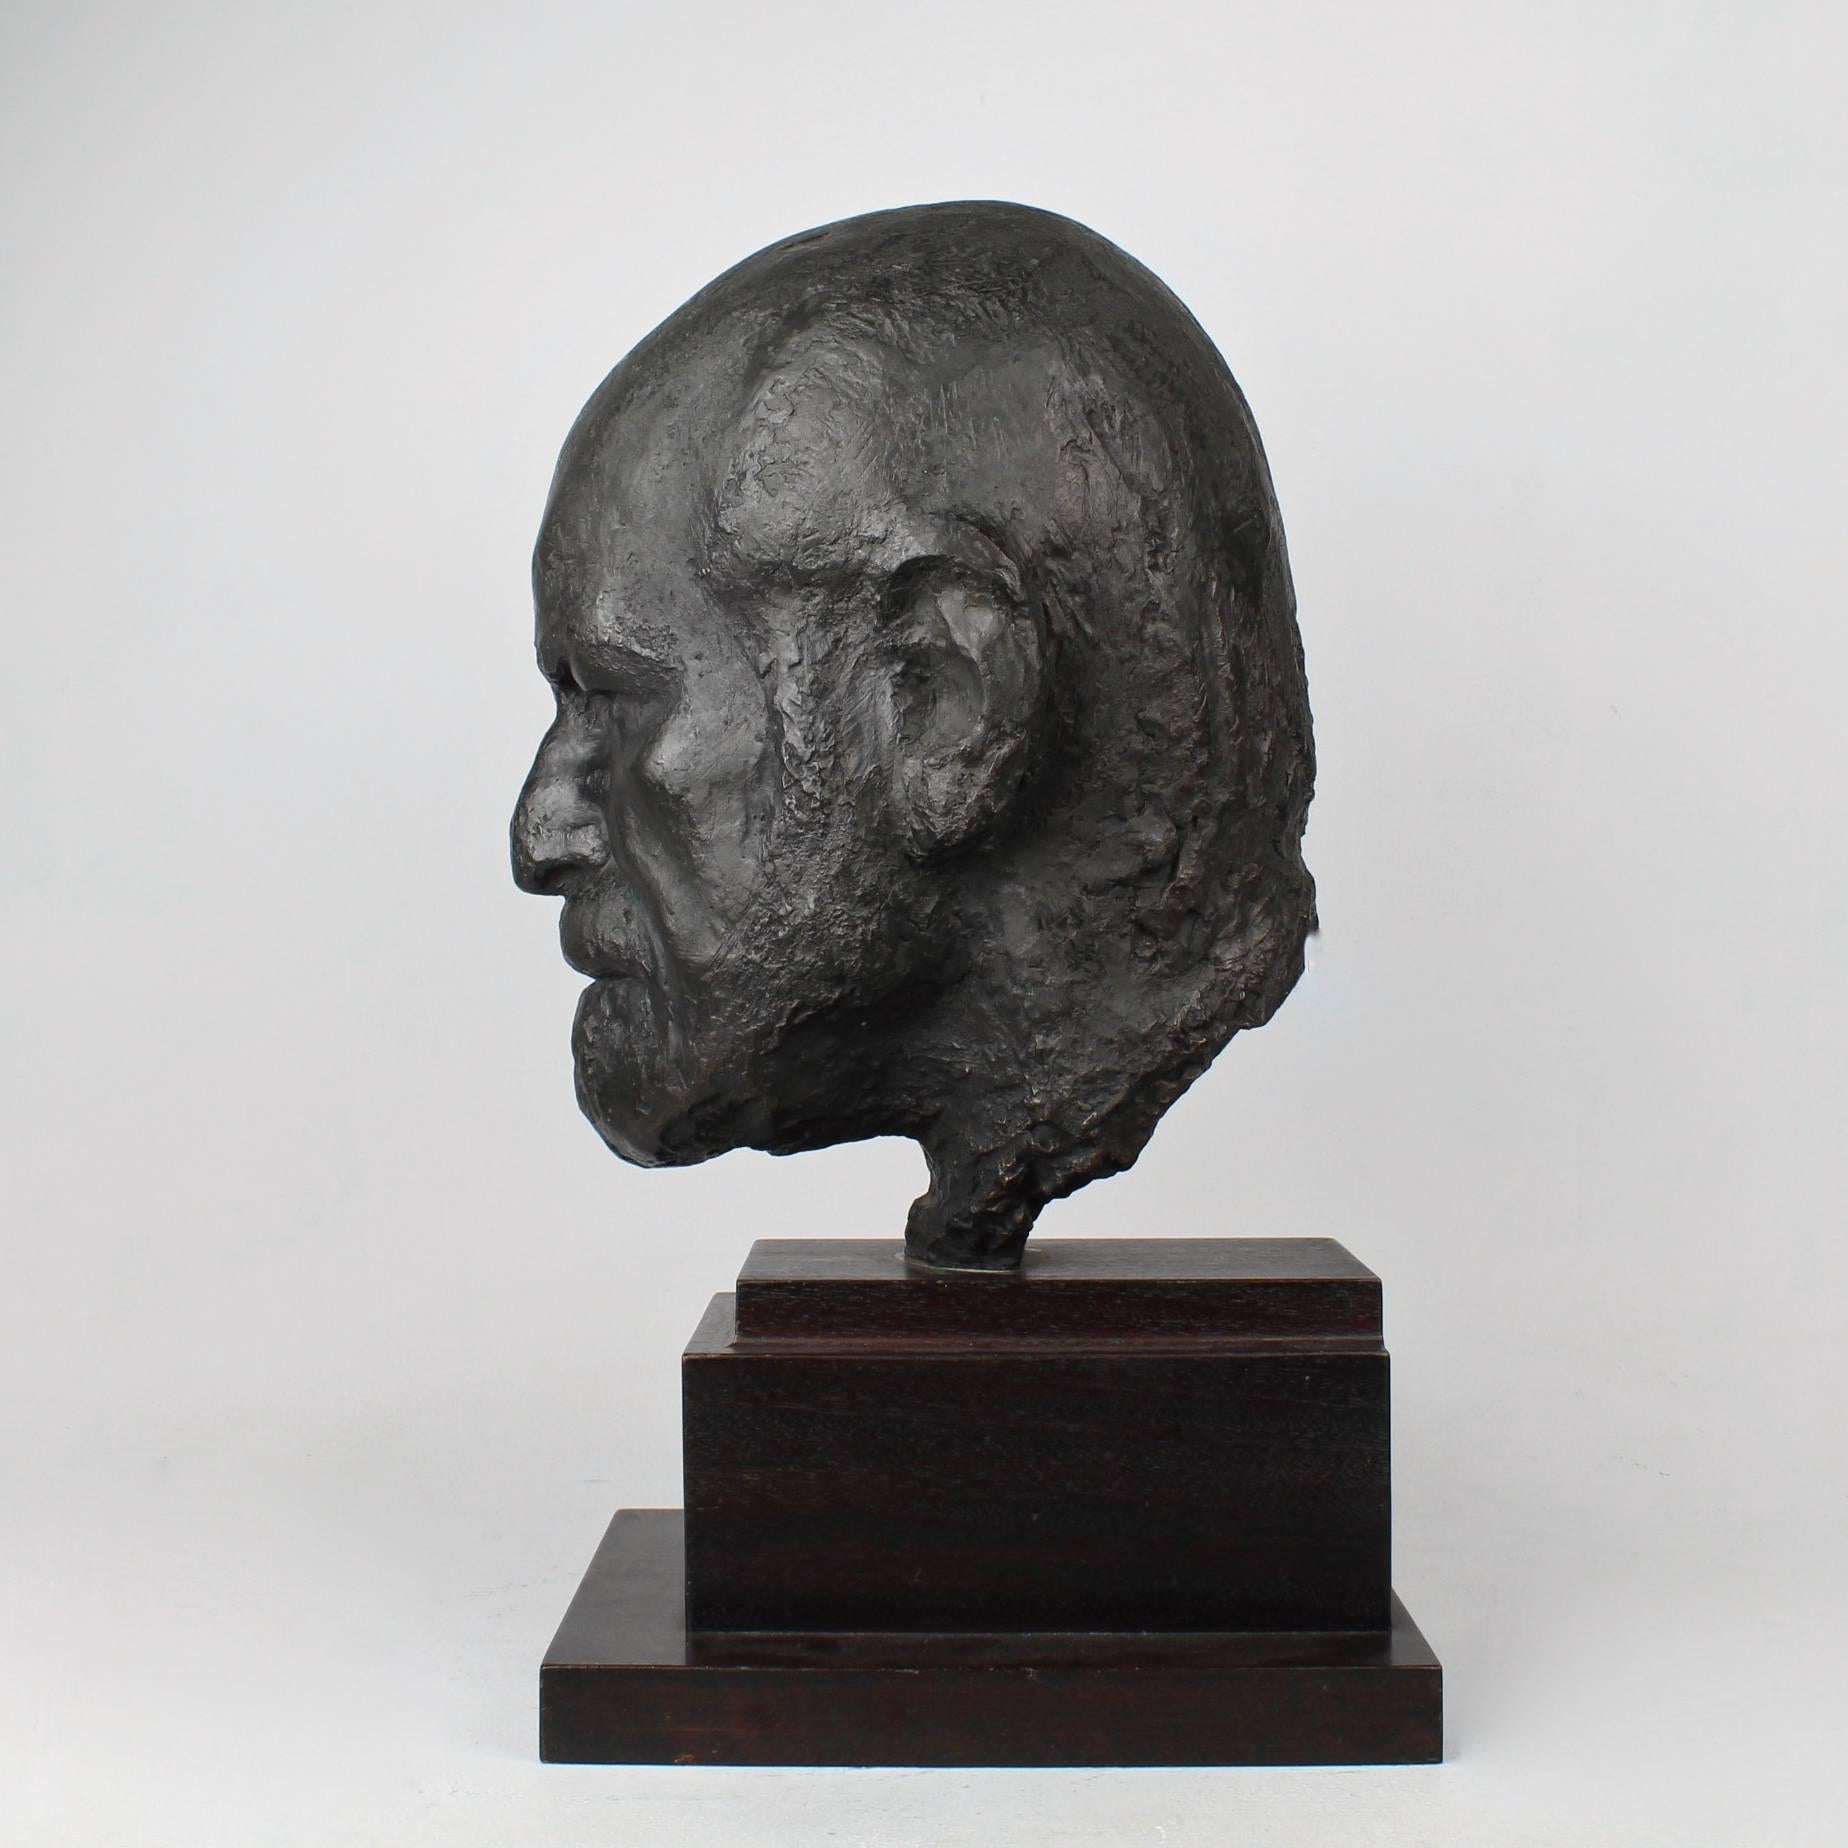 Modern Large Bronze Sculpture or Bust of Psychoanalyst Sigmund Freud by Oscar Nemon